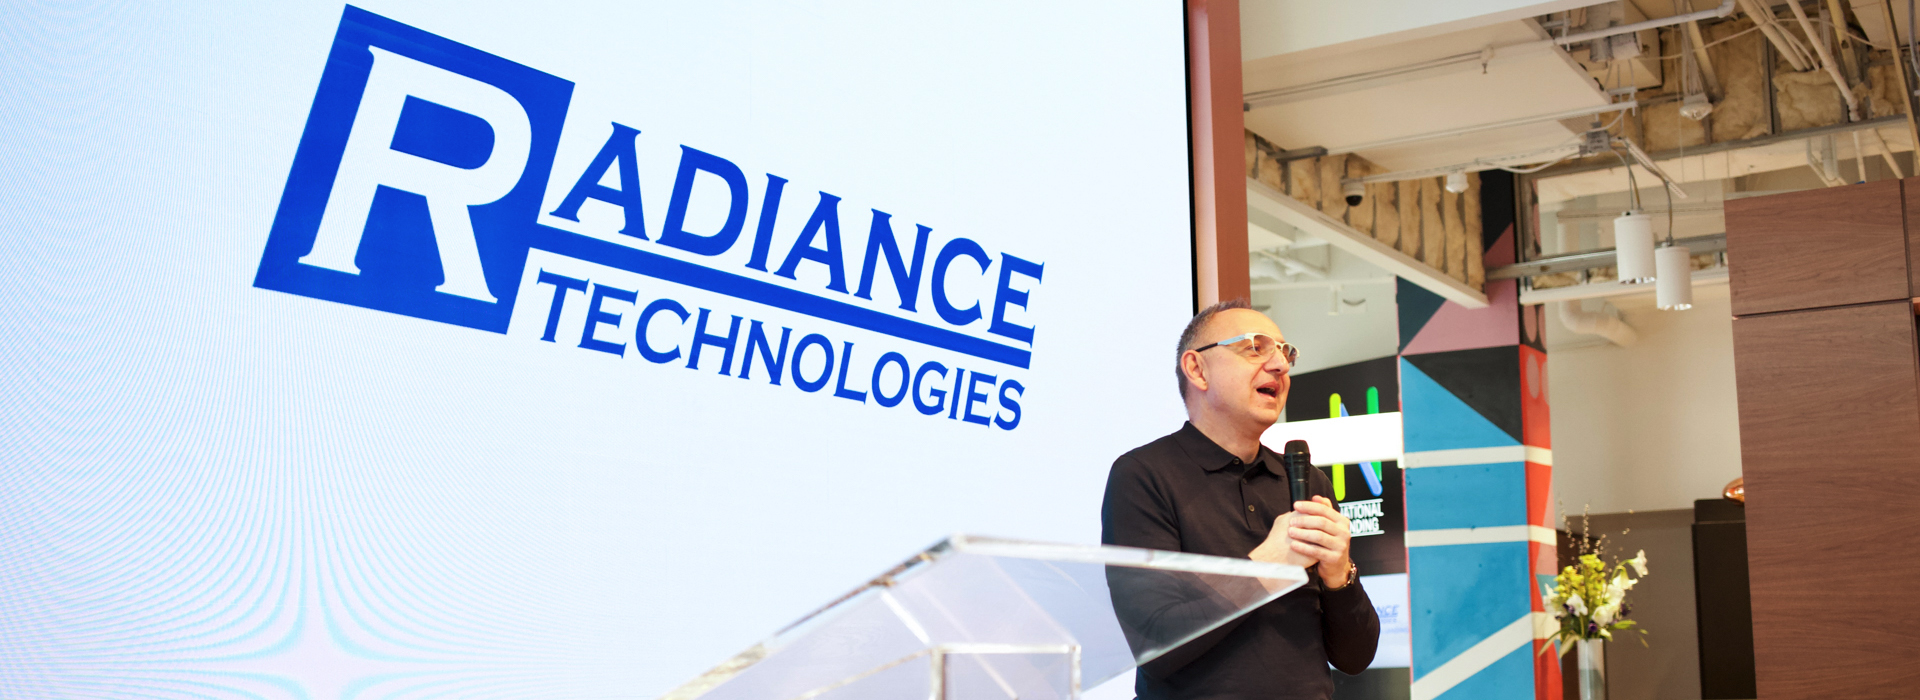 Radiance Technologies Expansion Announcement